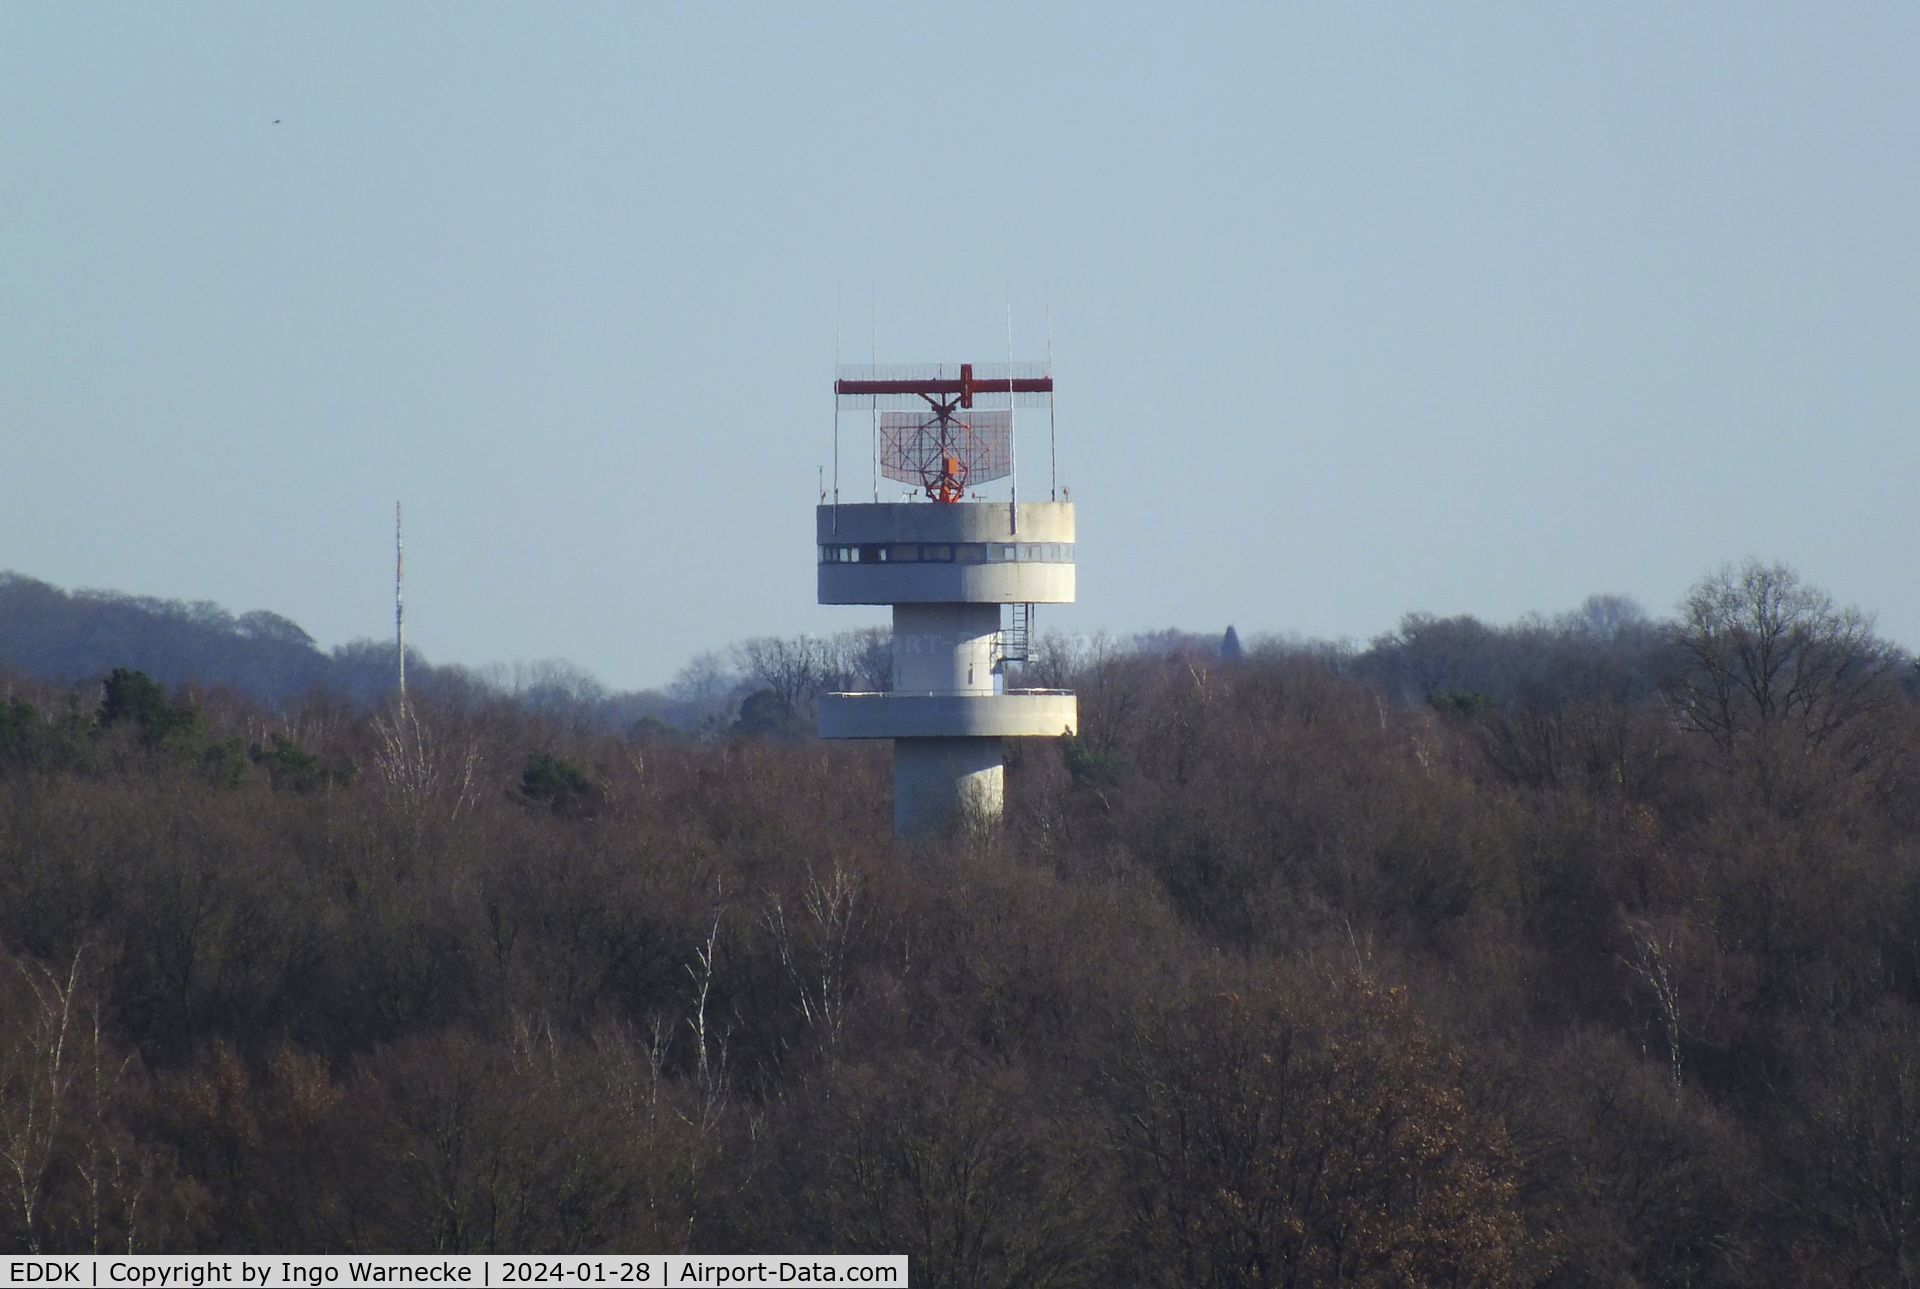 Cologne Bonn Airport, Cologne/Bonn Germany (EDDK) - the radar tower in the woods at Köln/Bonn airport